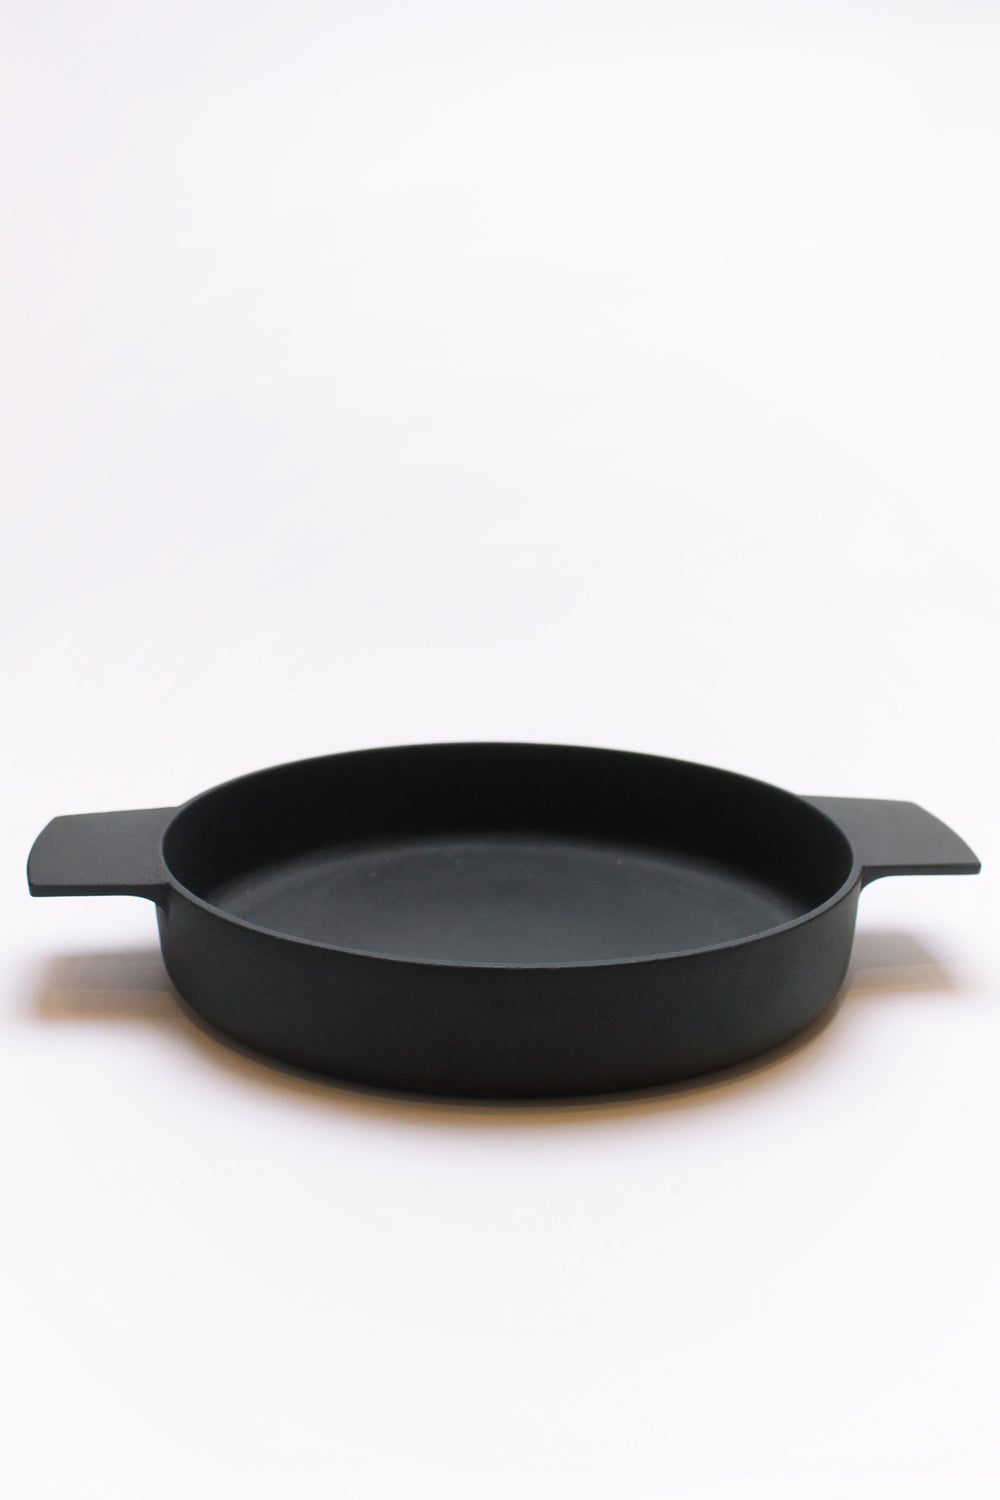 Medium Cast Iron Pan